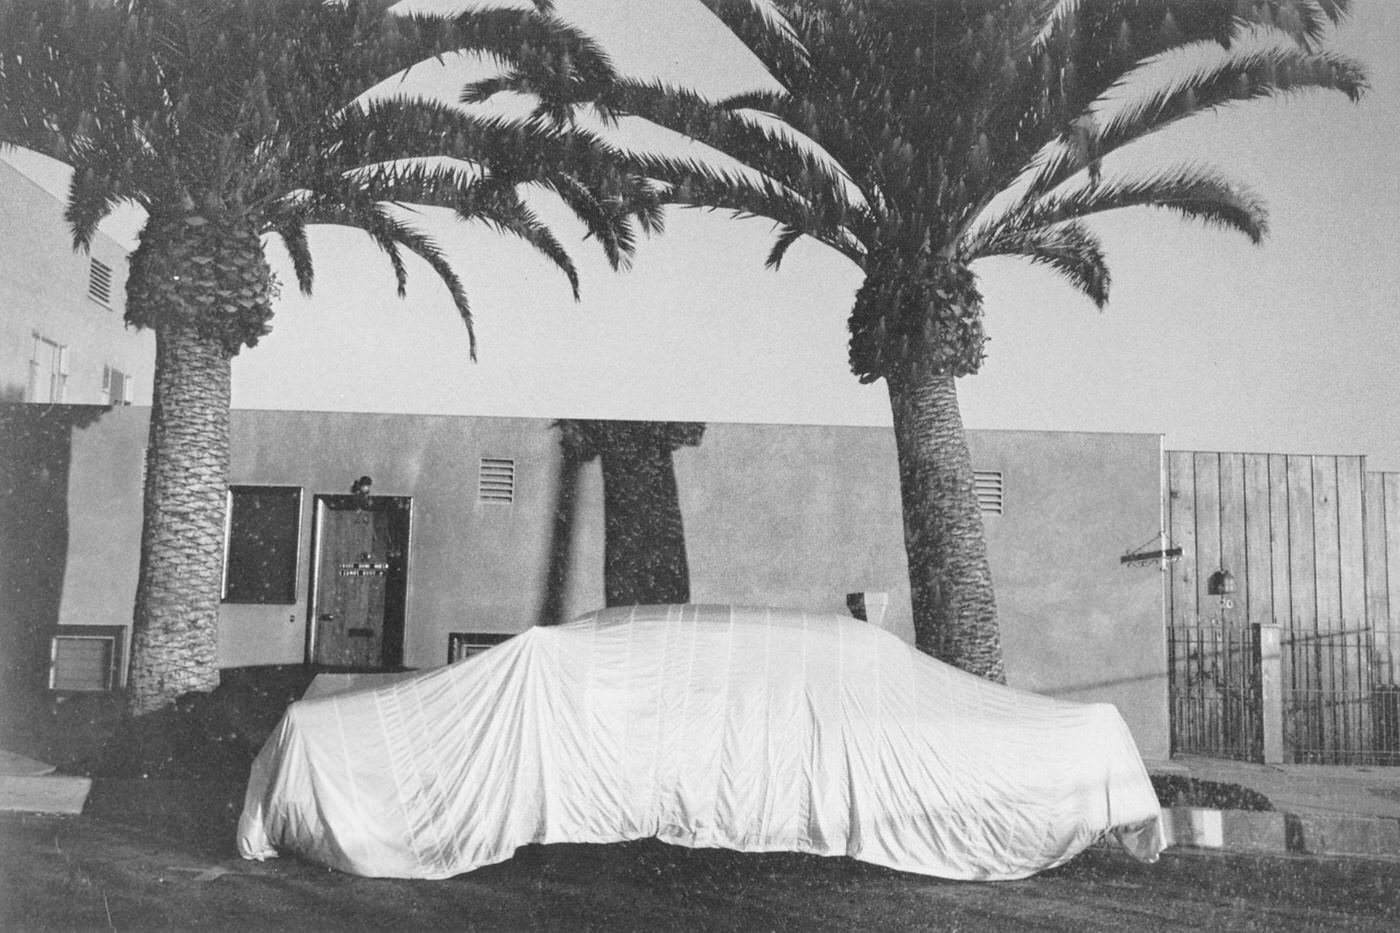 Covered car in Long Beach, California, 1956